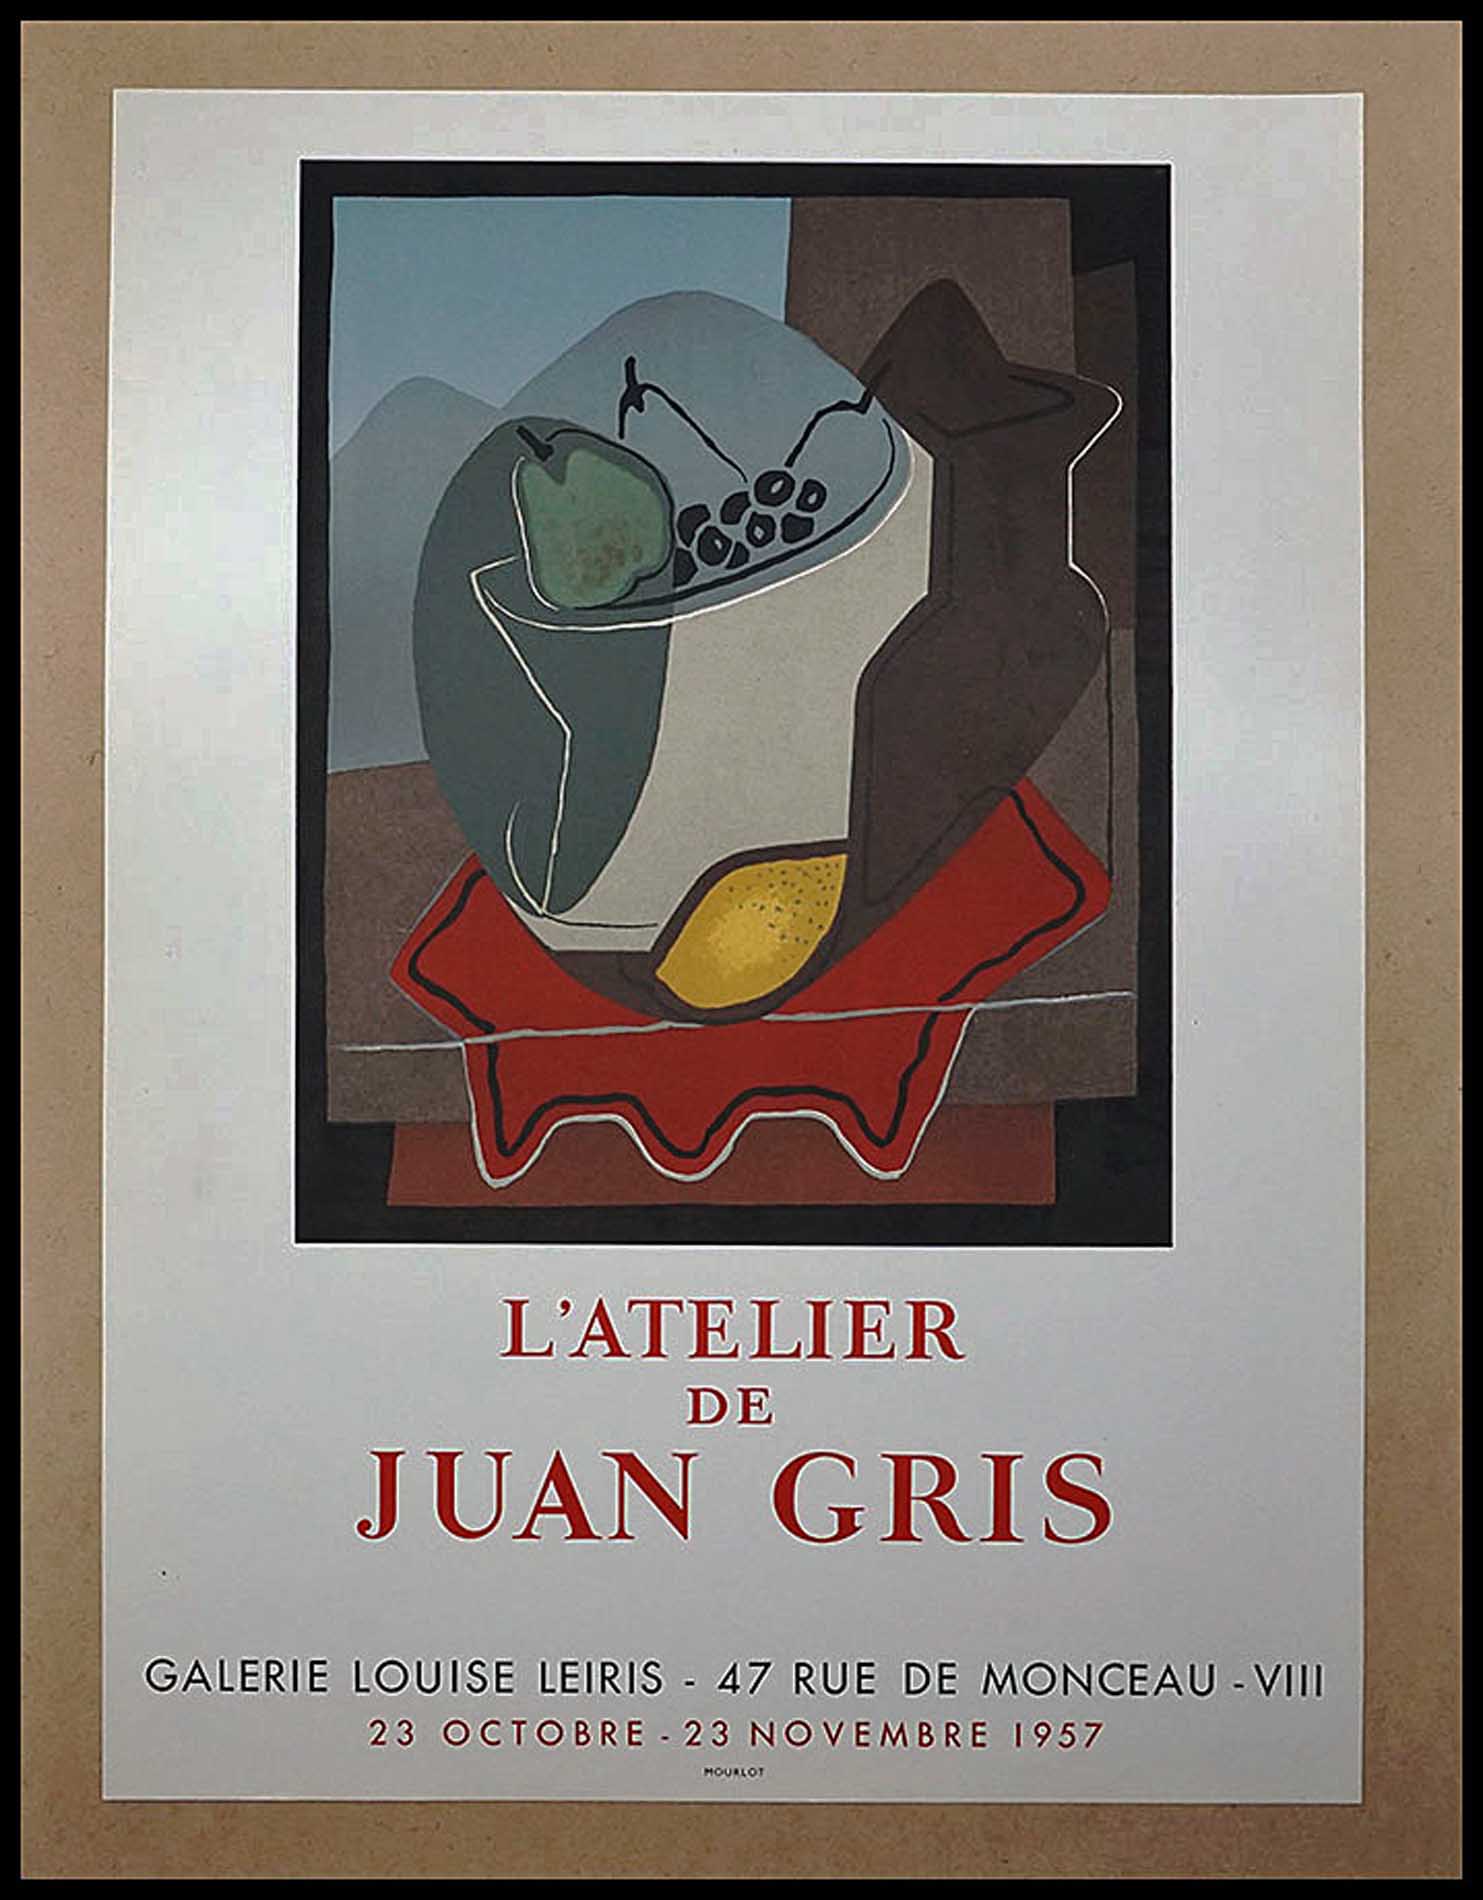 Juan Gris, Galerie Louise Leiris